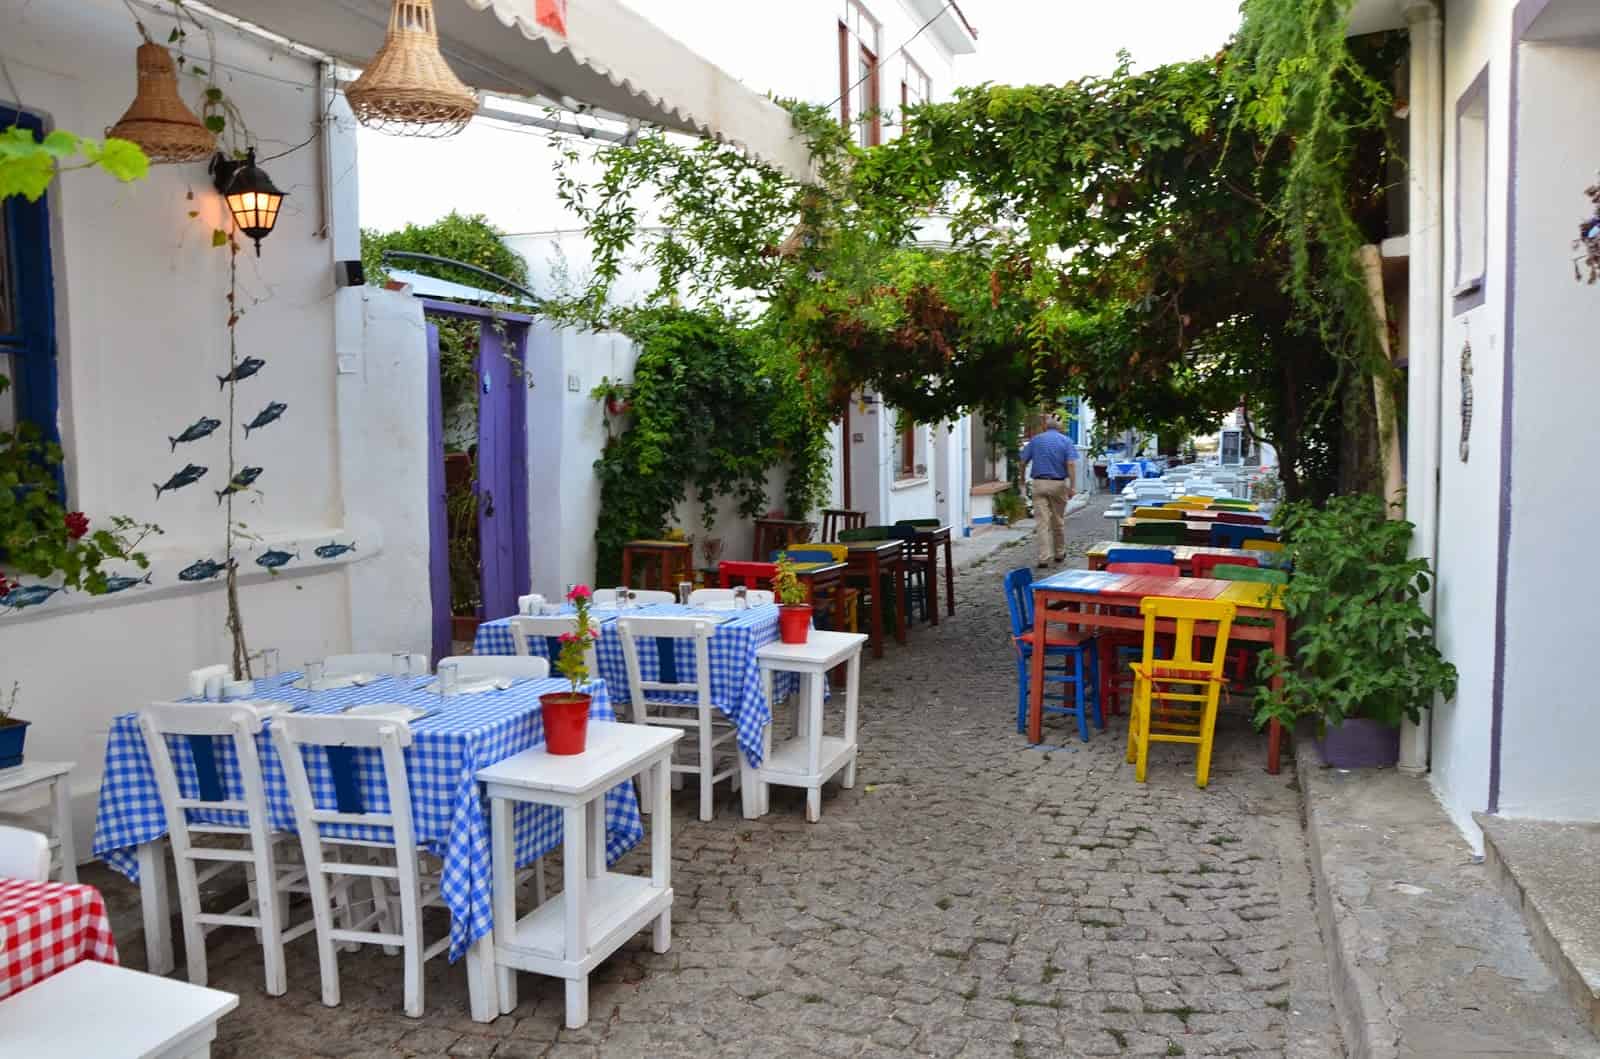 Greek Quarter in Bozcaada, Turkey